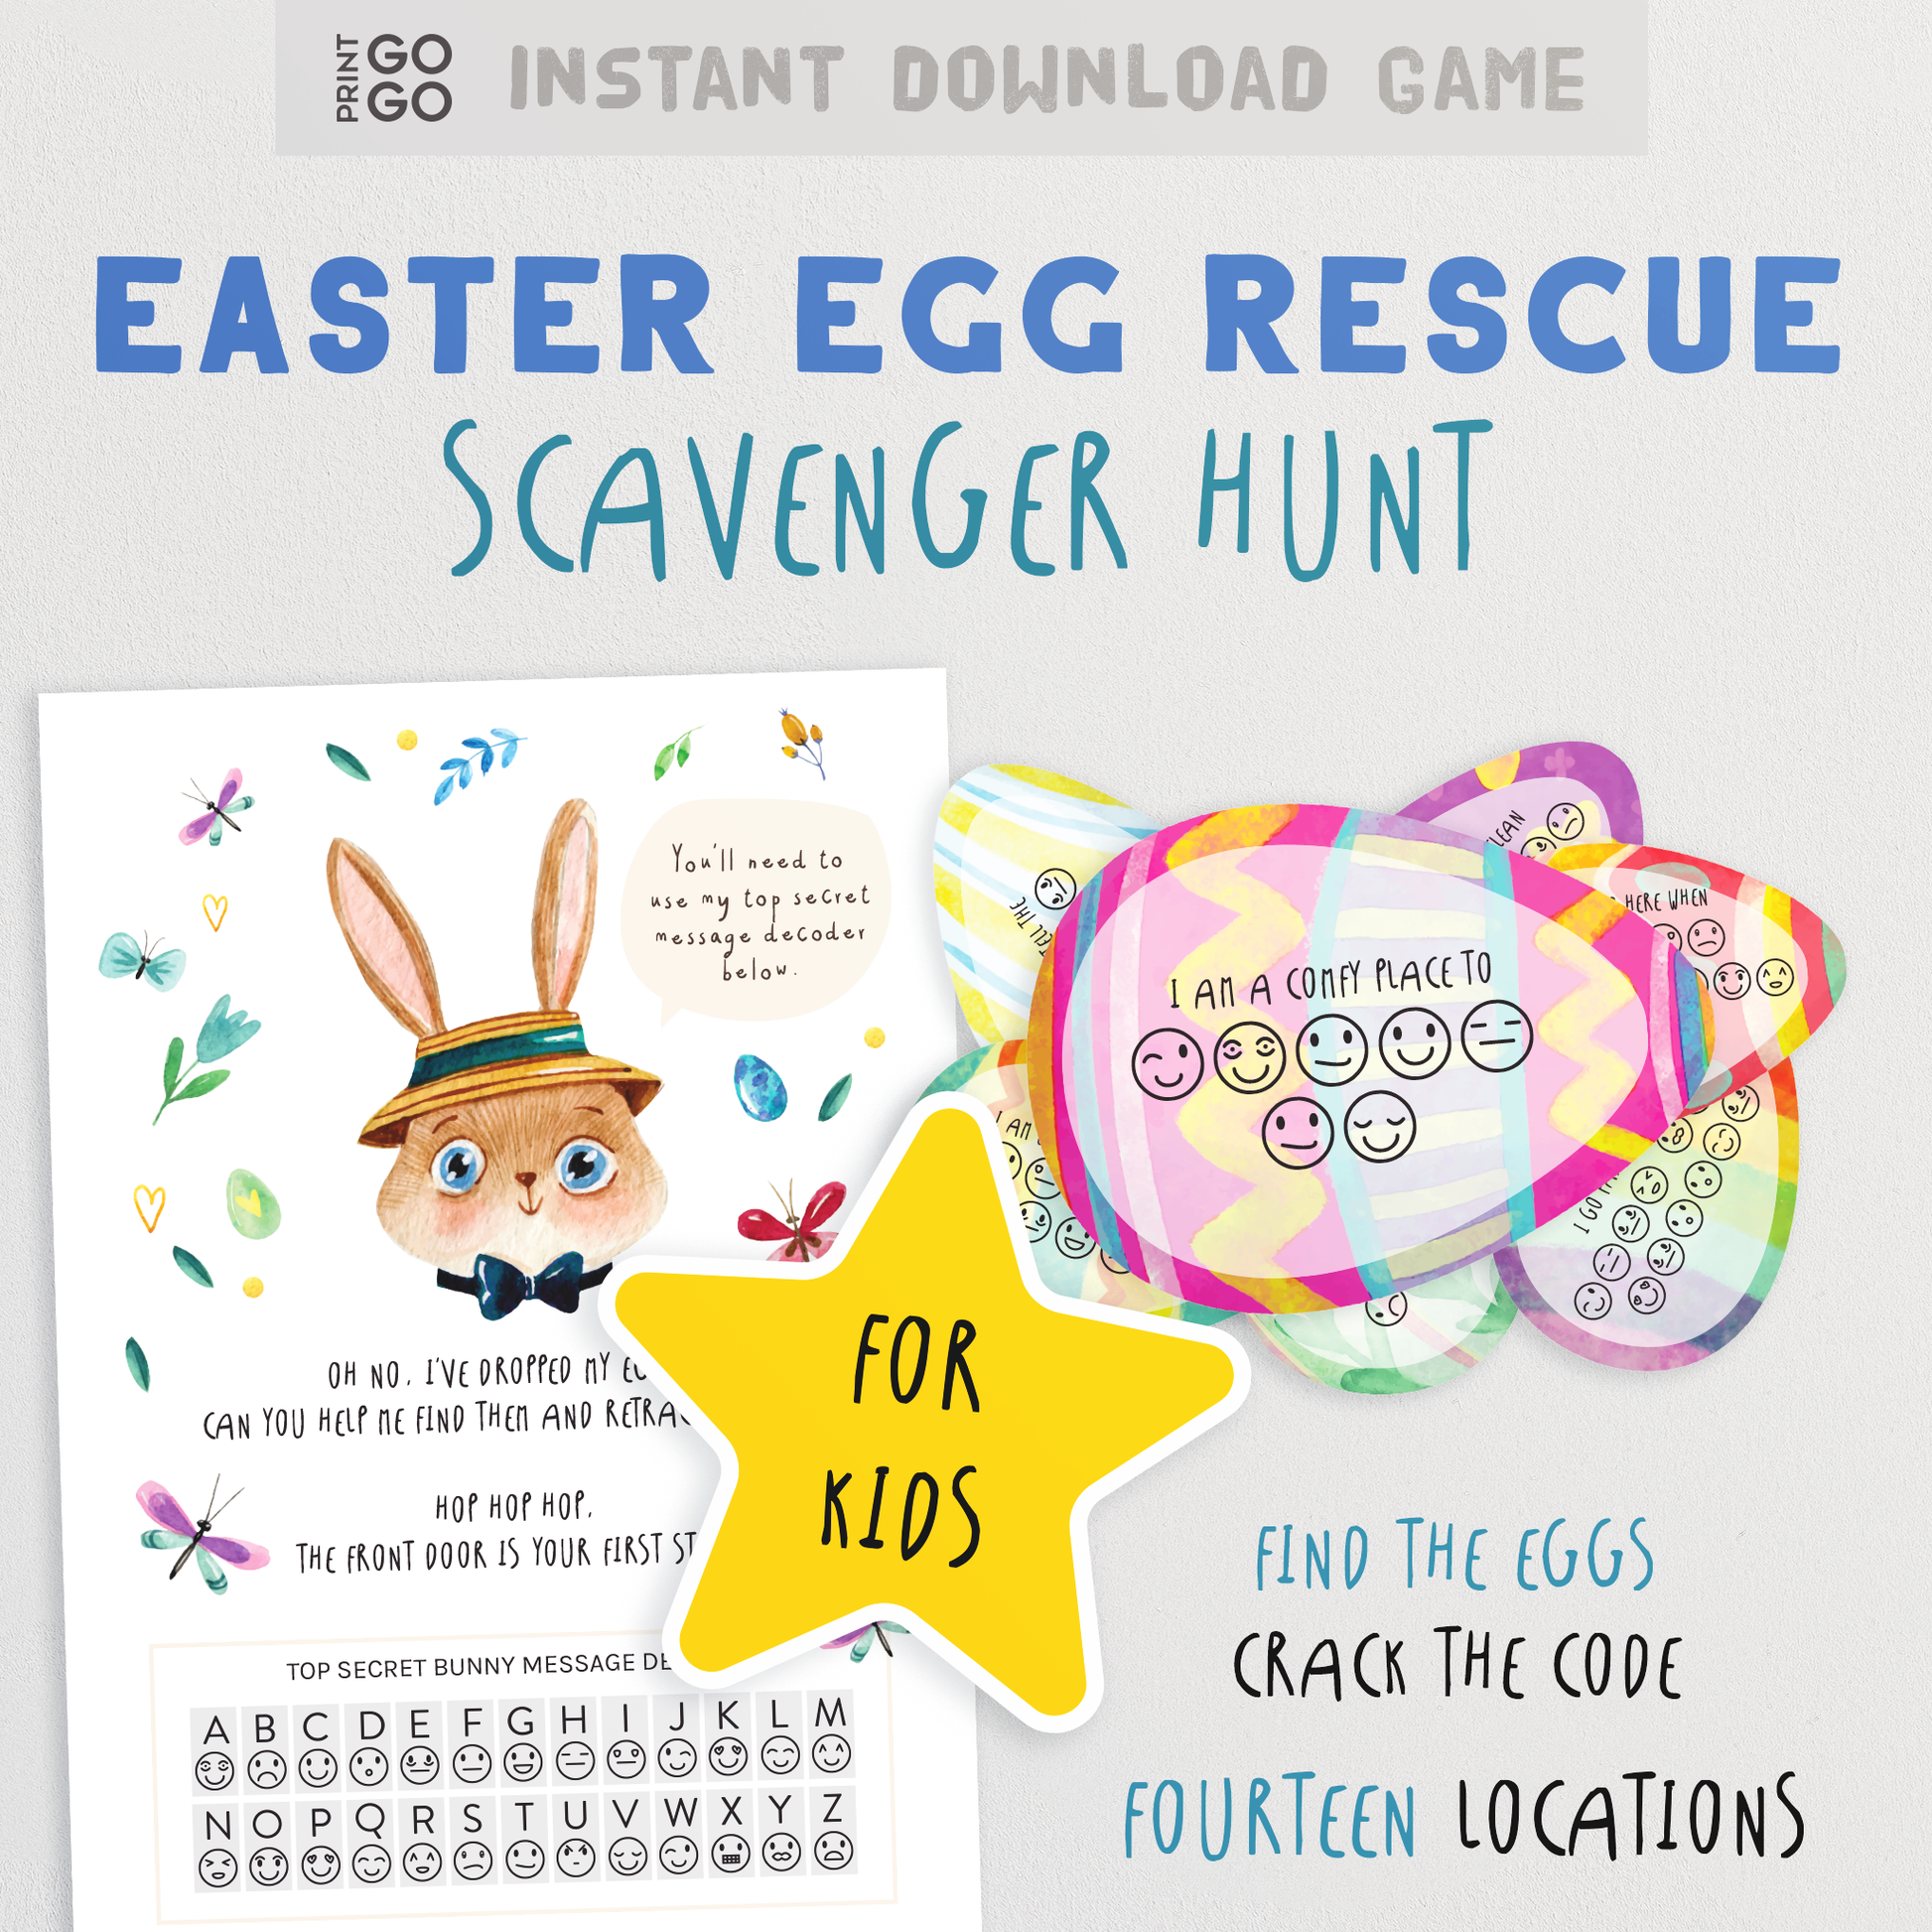 Easter Egg Rescue Scavenger Hunt - The Code Breaking, Secret Message Solving, Puzzle Game for Kids